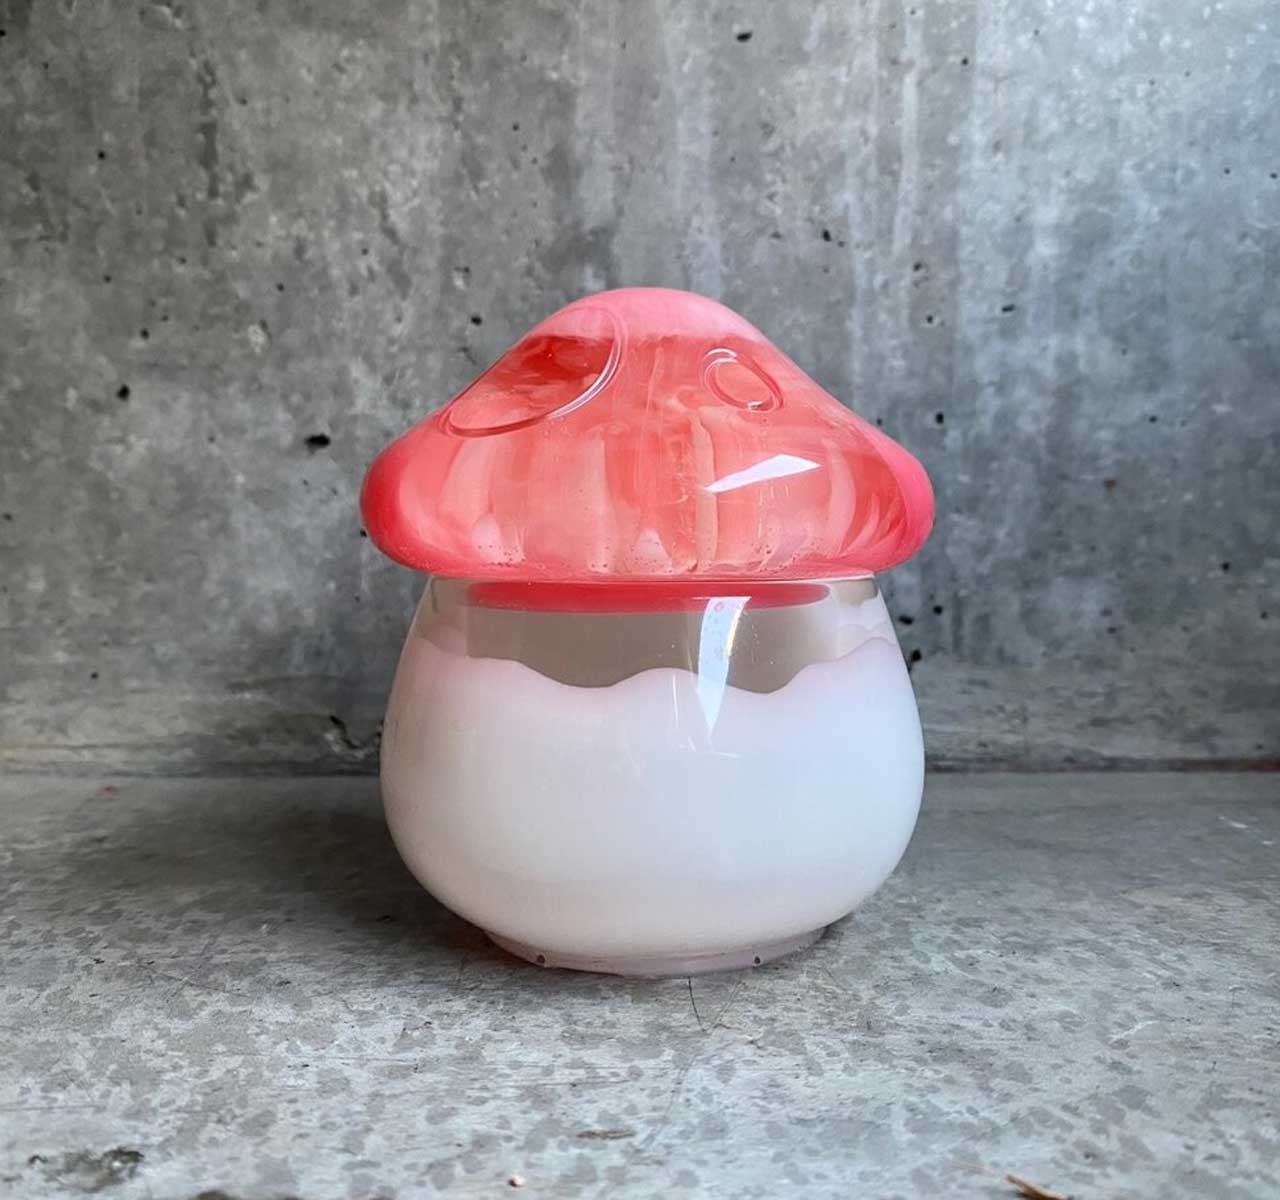 Mushroom Jar - Classic Red Cap